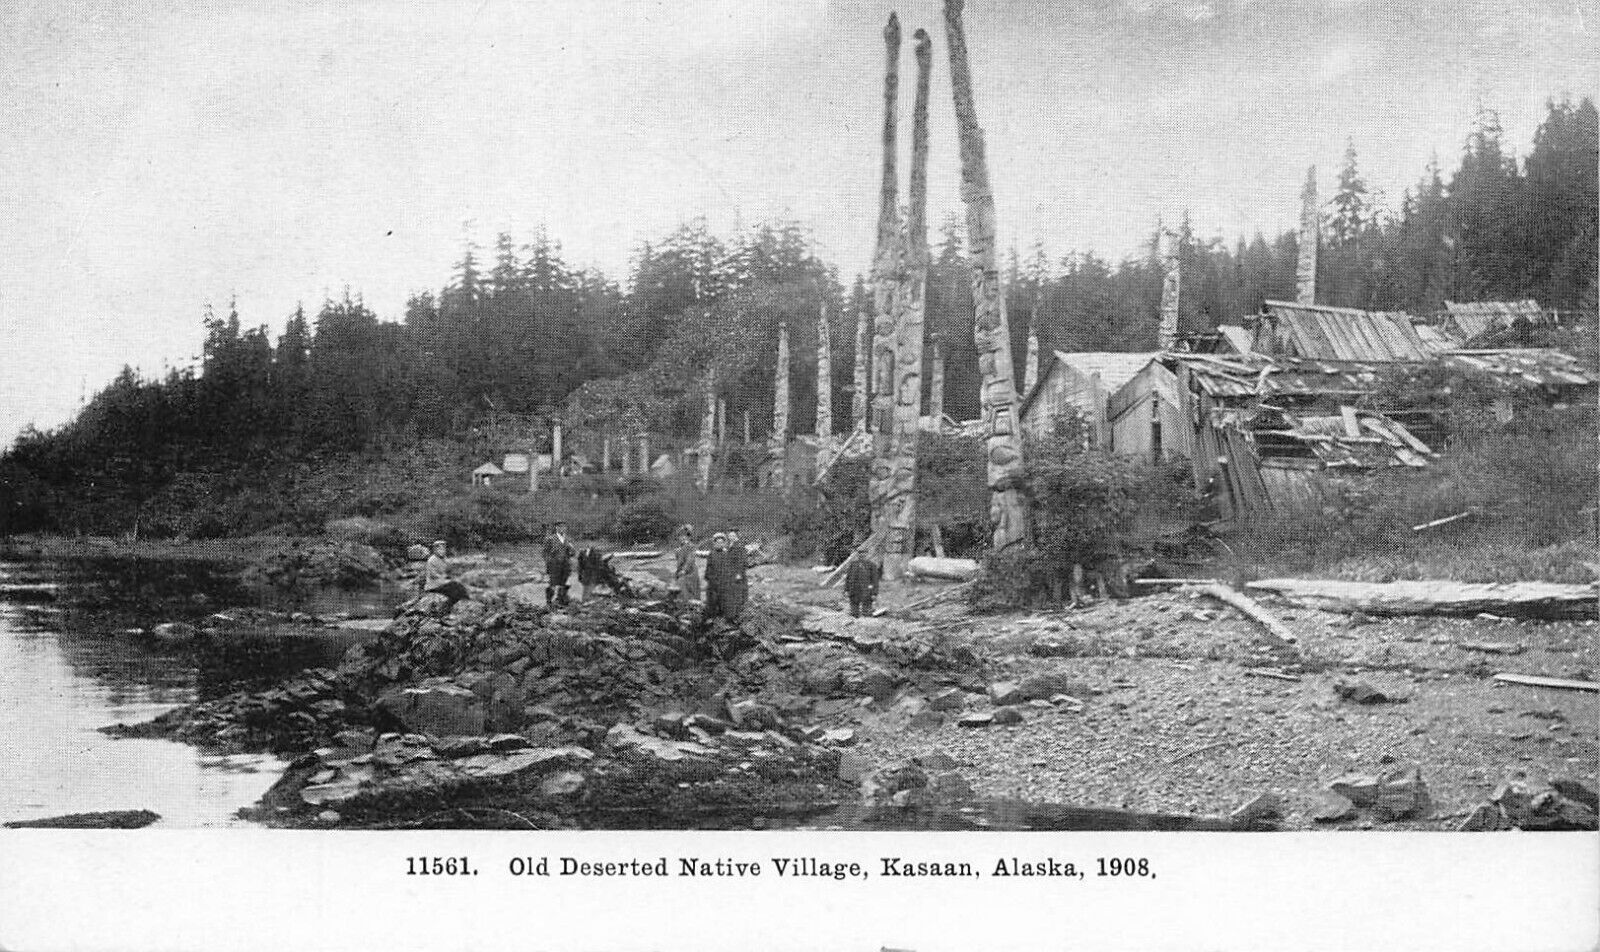 ALASKA PHOTO POSTCARD: OLD DESERTED NATIVE VILLAGE, KASAAN, AK